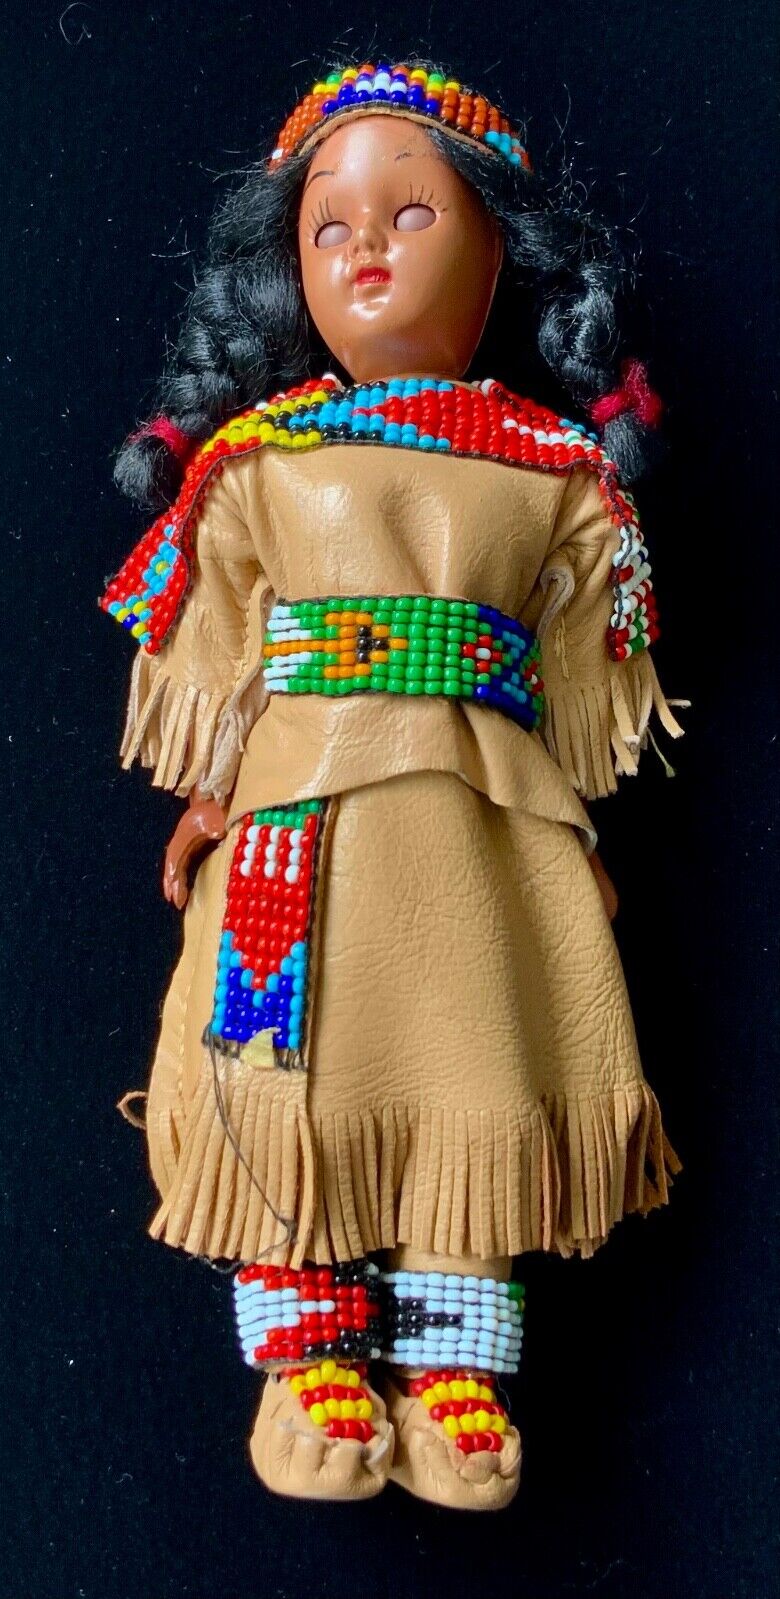 VTG Native American Souvenir Doll with elaborate beading.